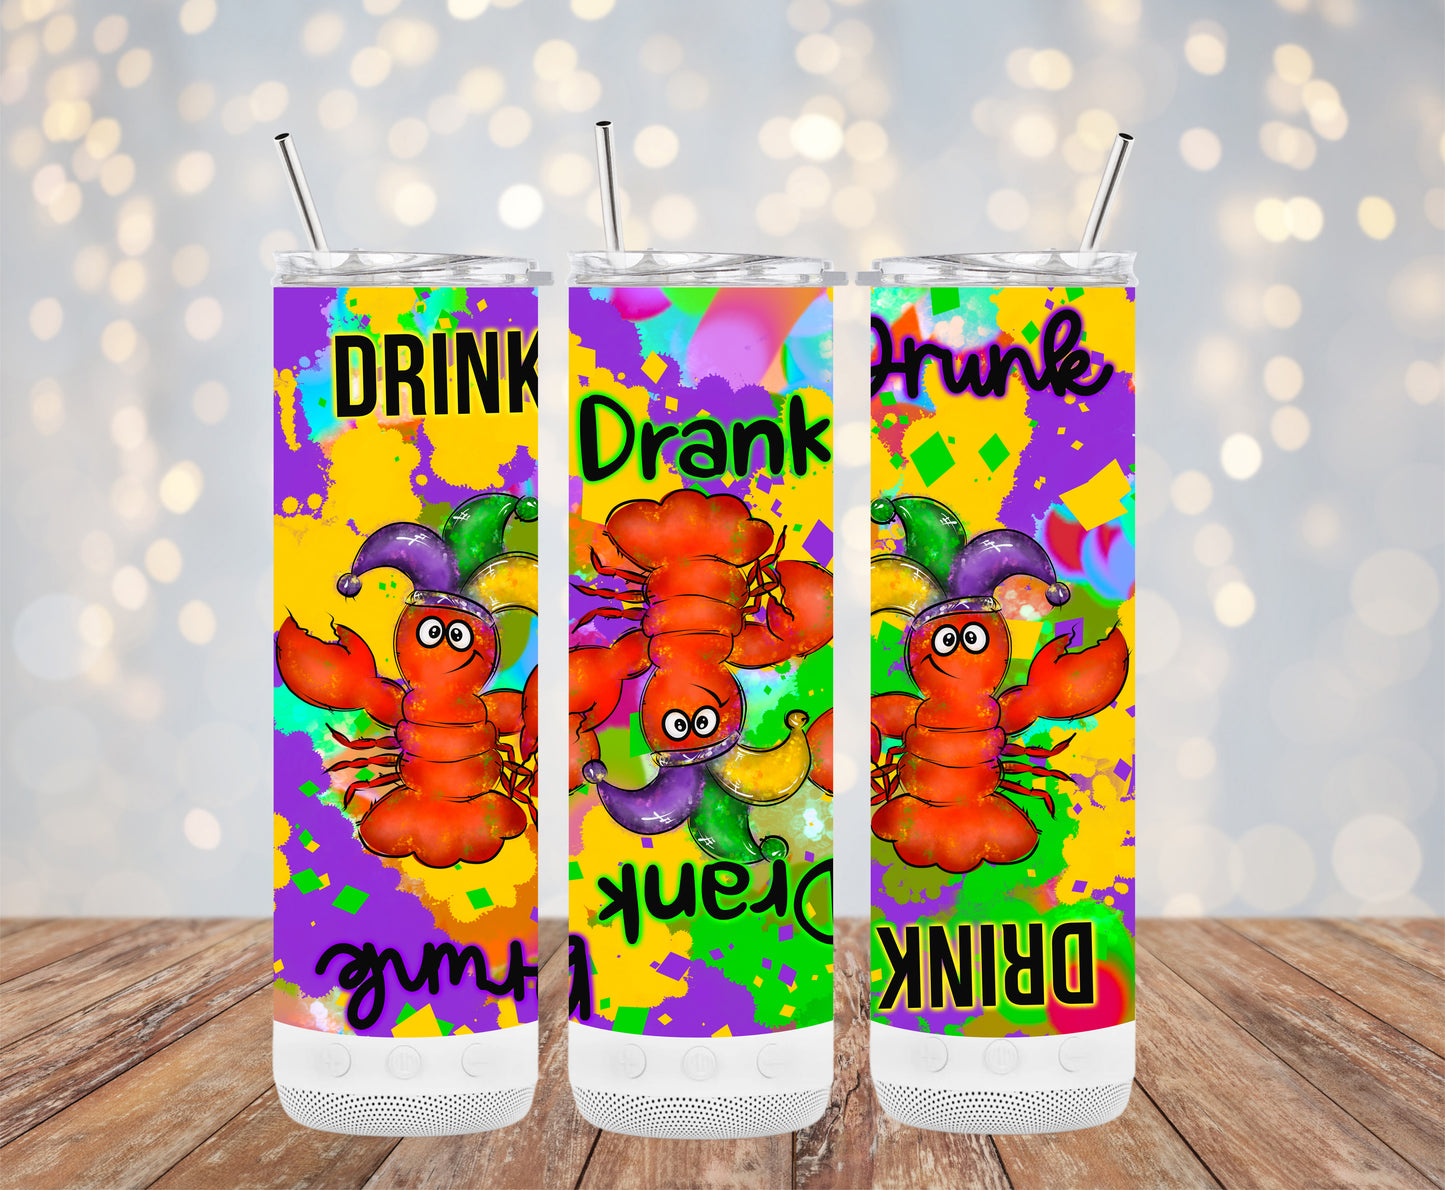 Drink Drank Drunk (Mardi Gras Tumbler)